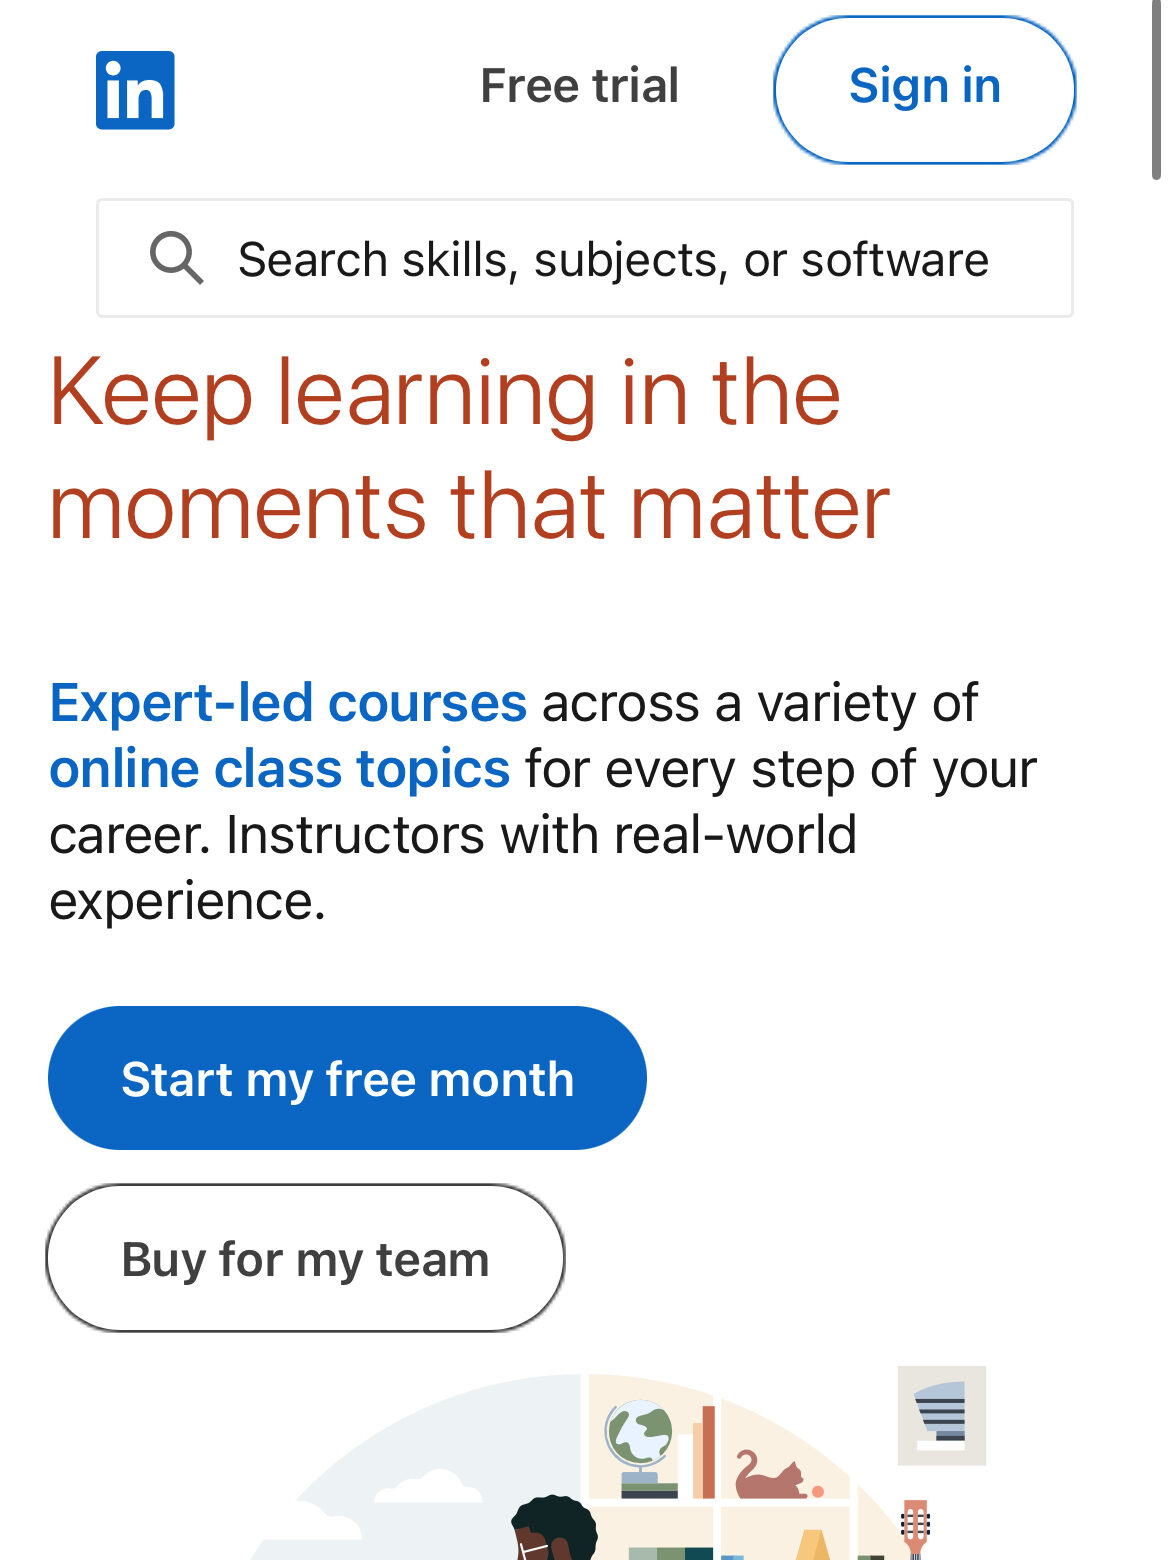 A screenshot of the LinkedIn Learning website.